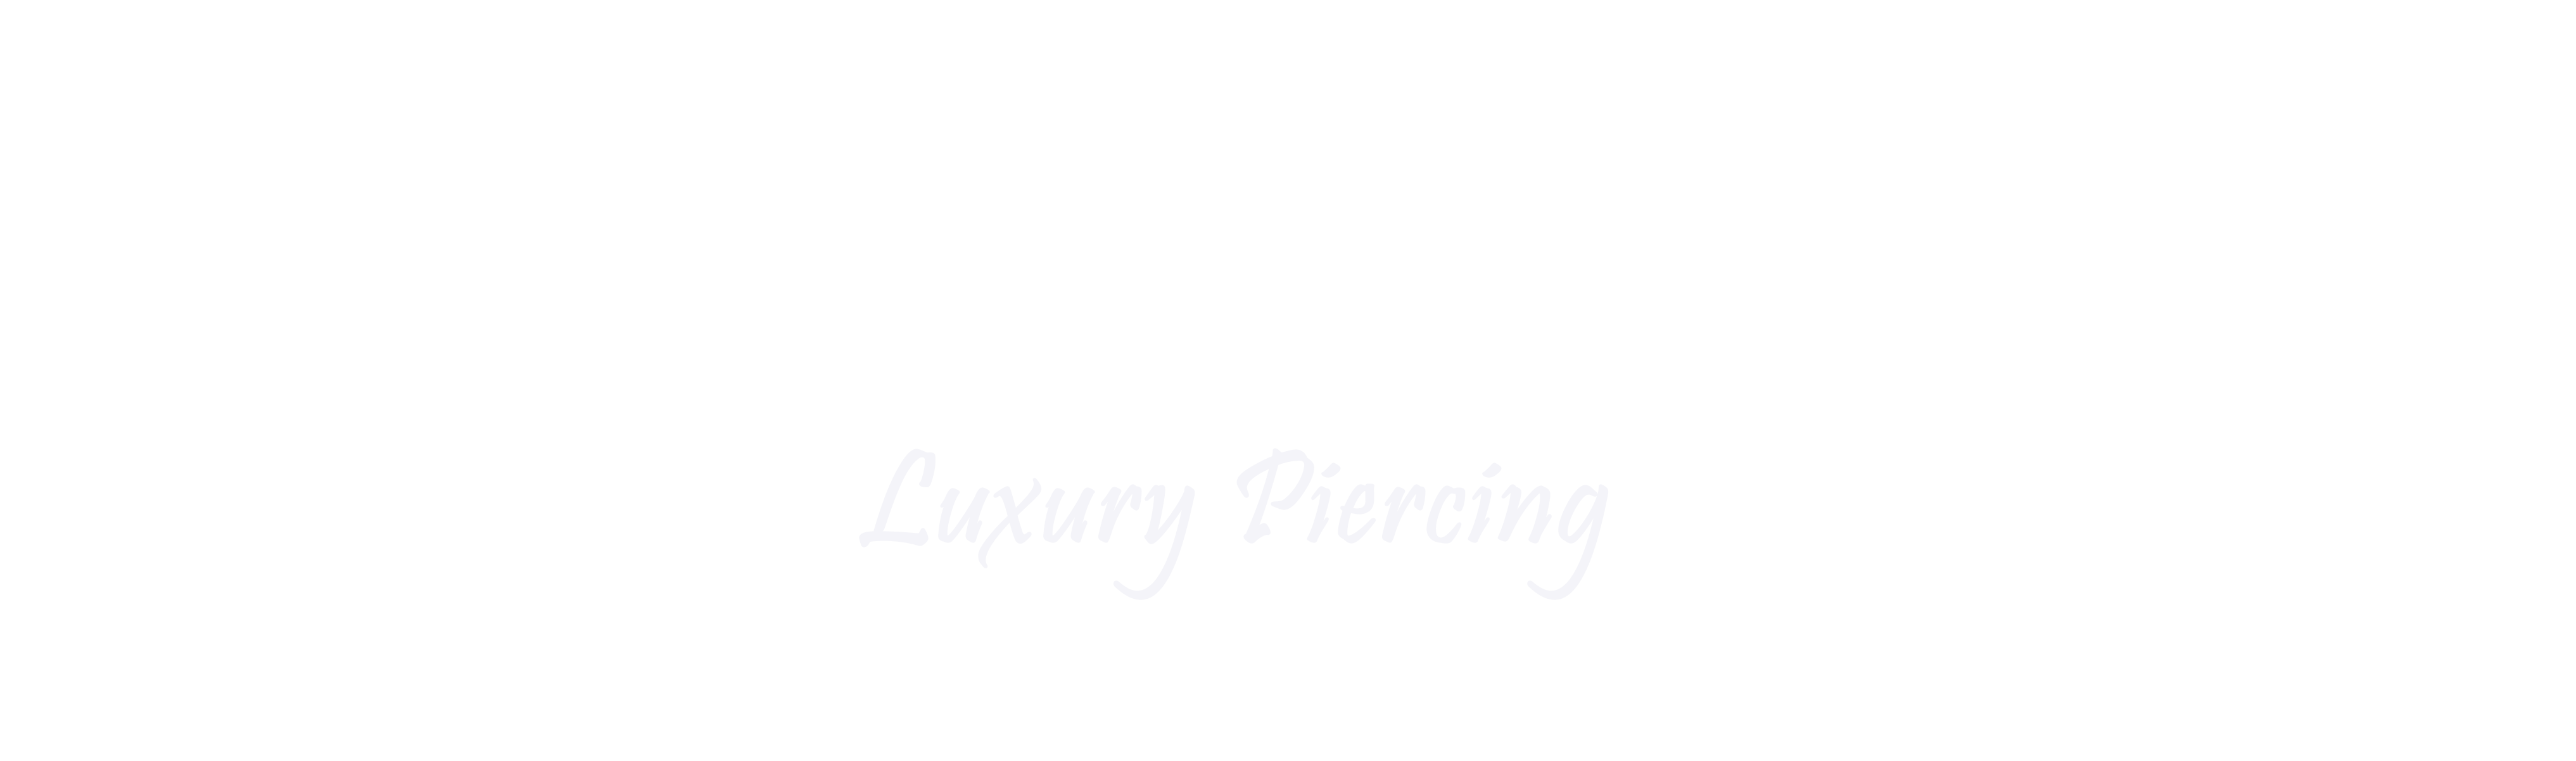 Popart Piercing